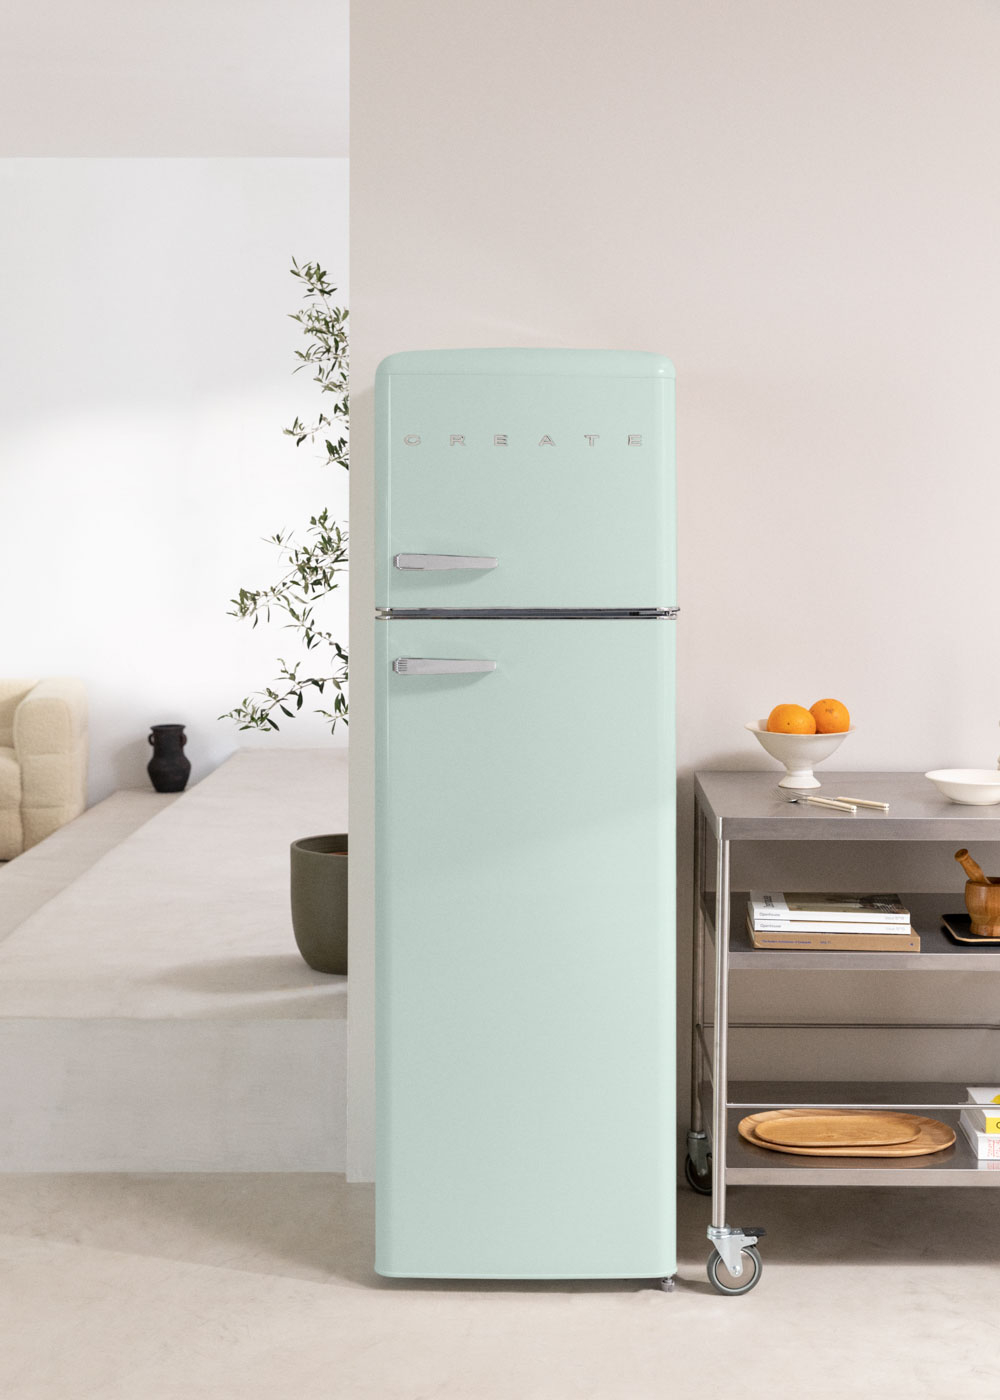 Frigoriferi, acquisto online frigoriferi in offerta